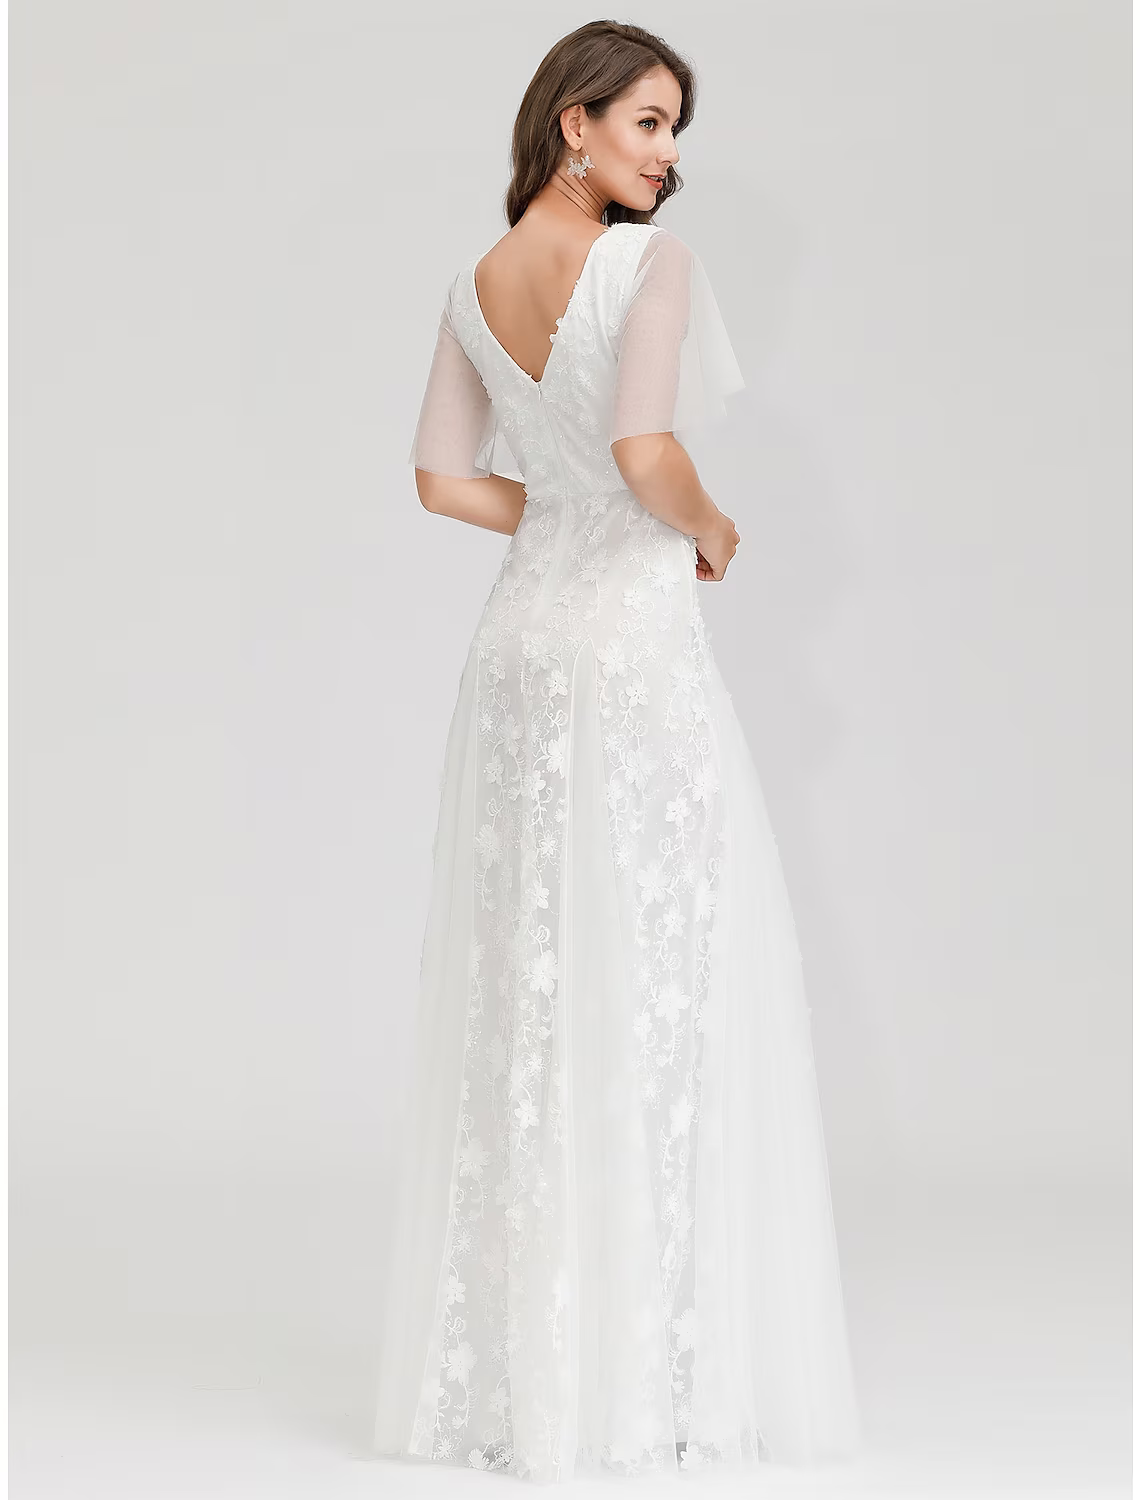 Bridal Shower Wedding Dresses A-Line Short Sleeve V Neck Tulle With Lace Appliques